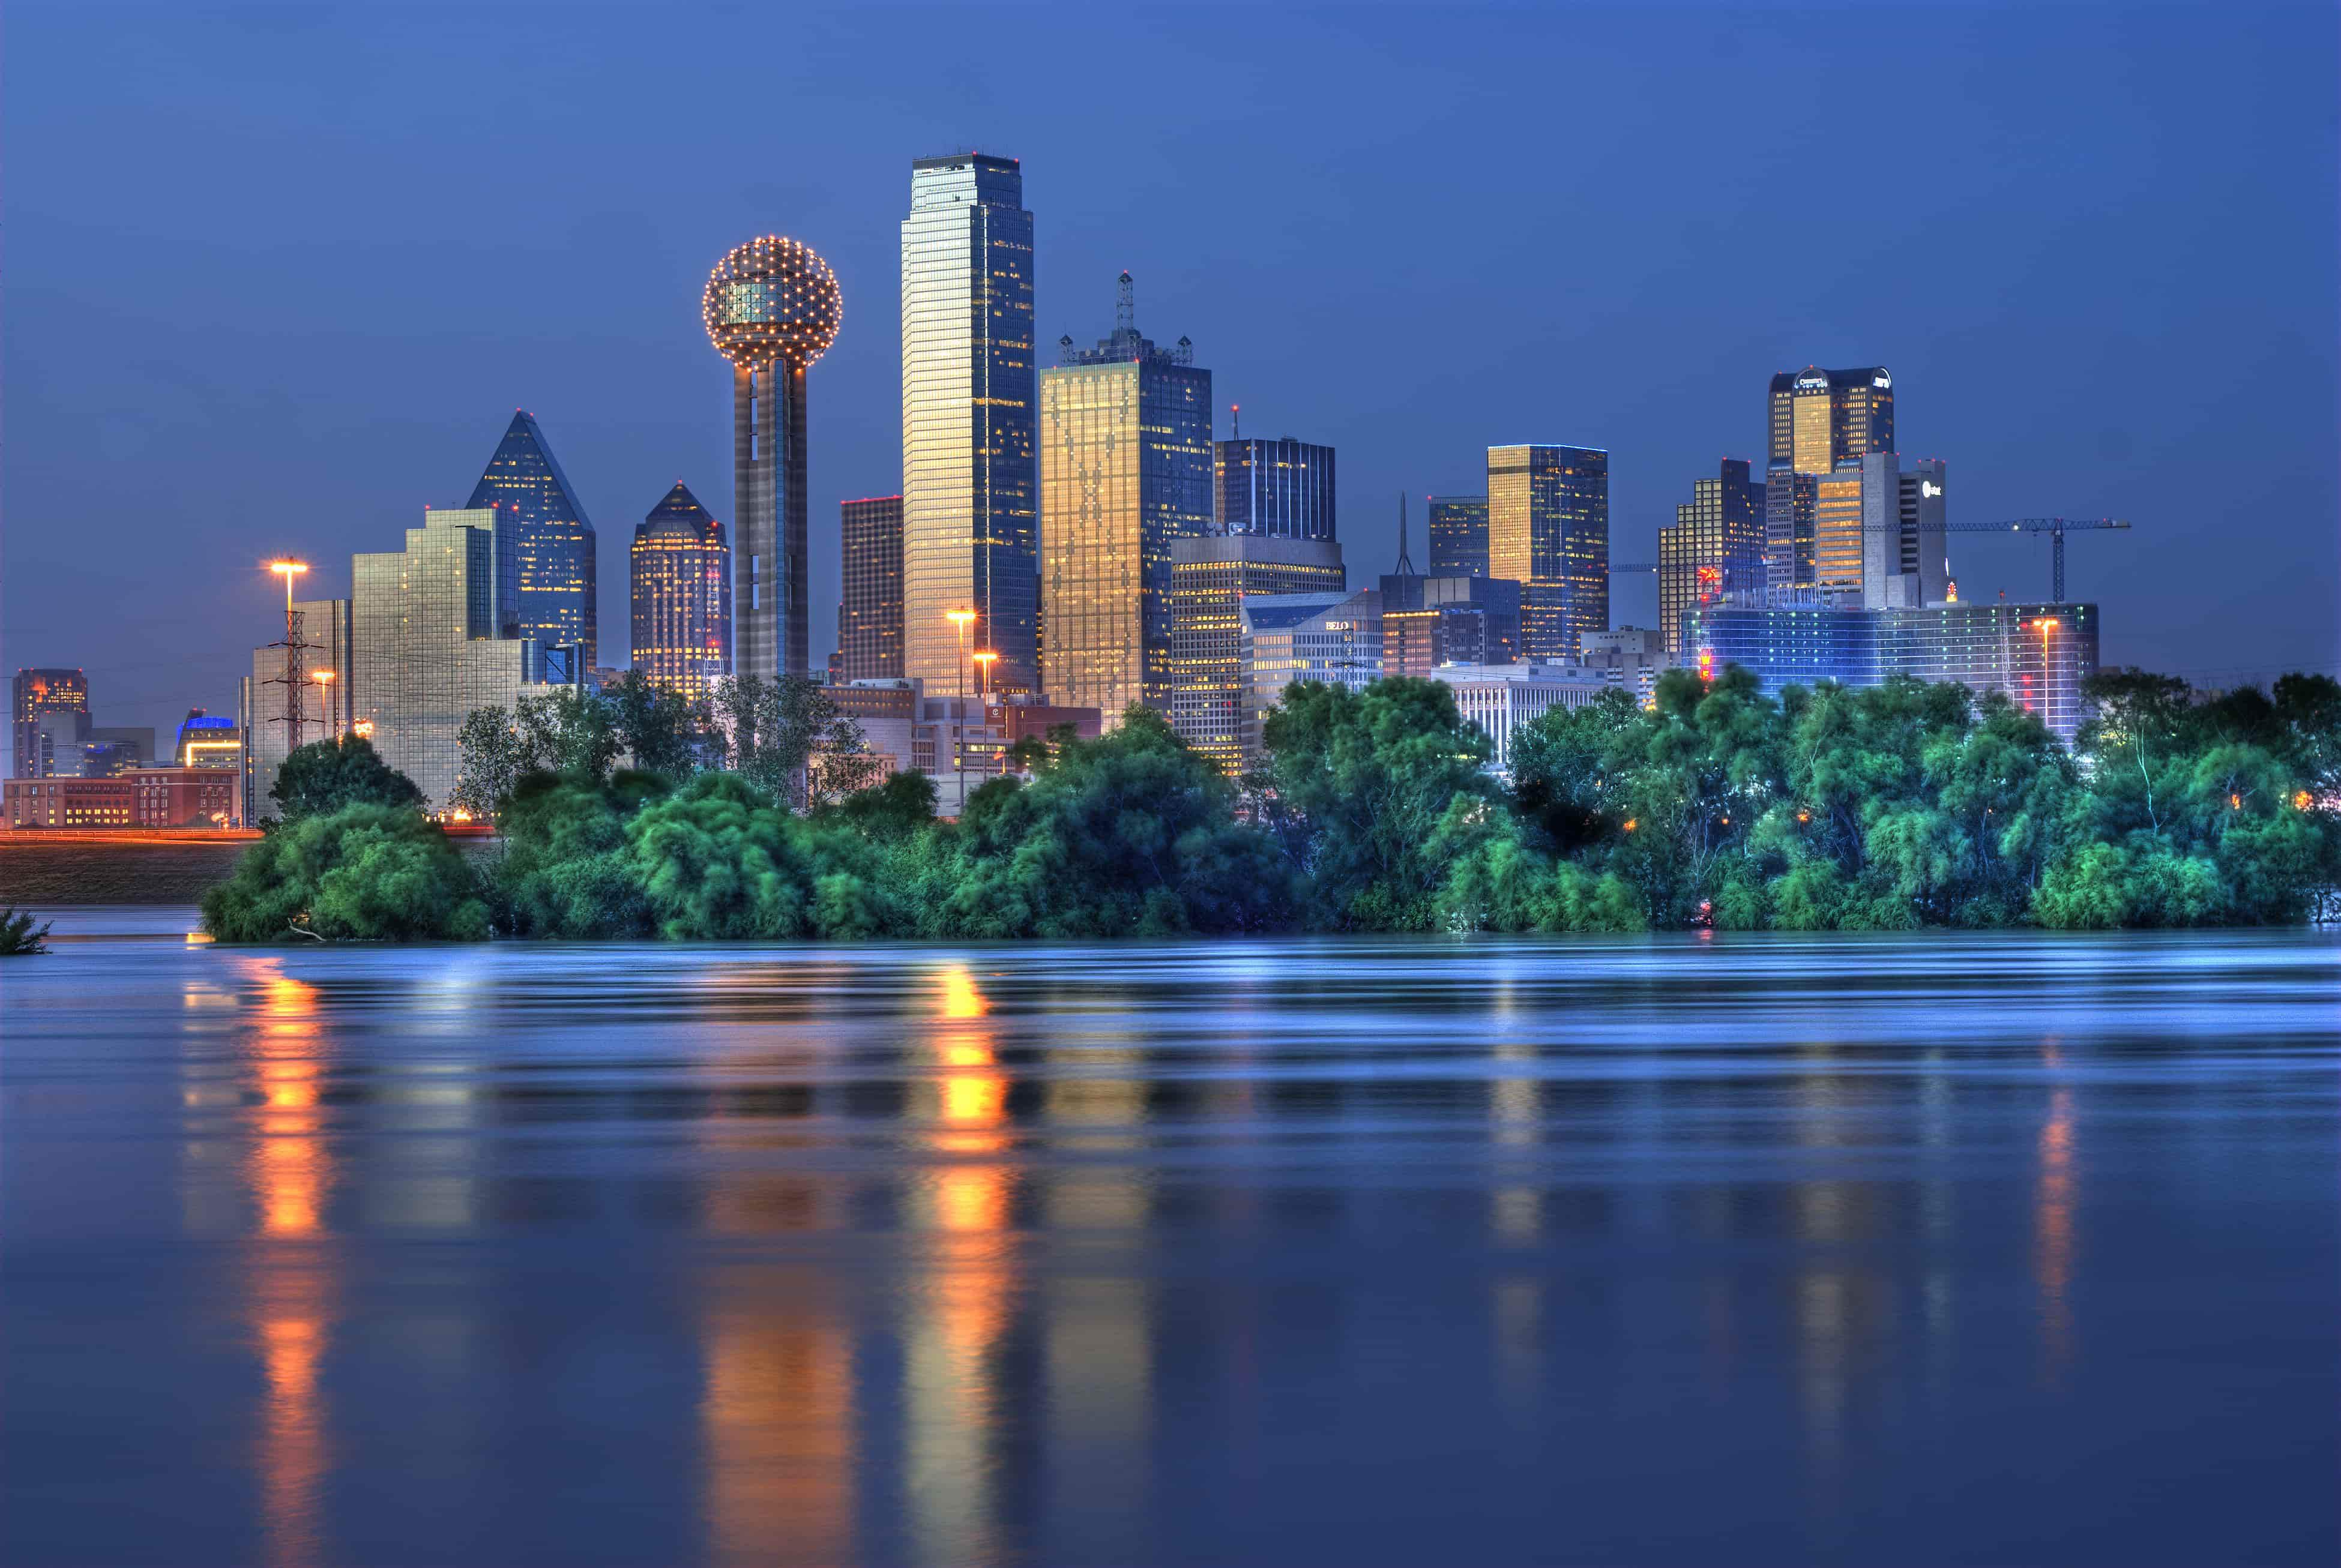 A scenic view of downtown Dallas